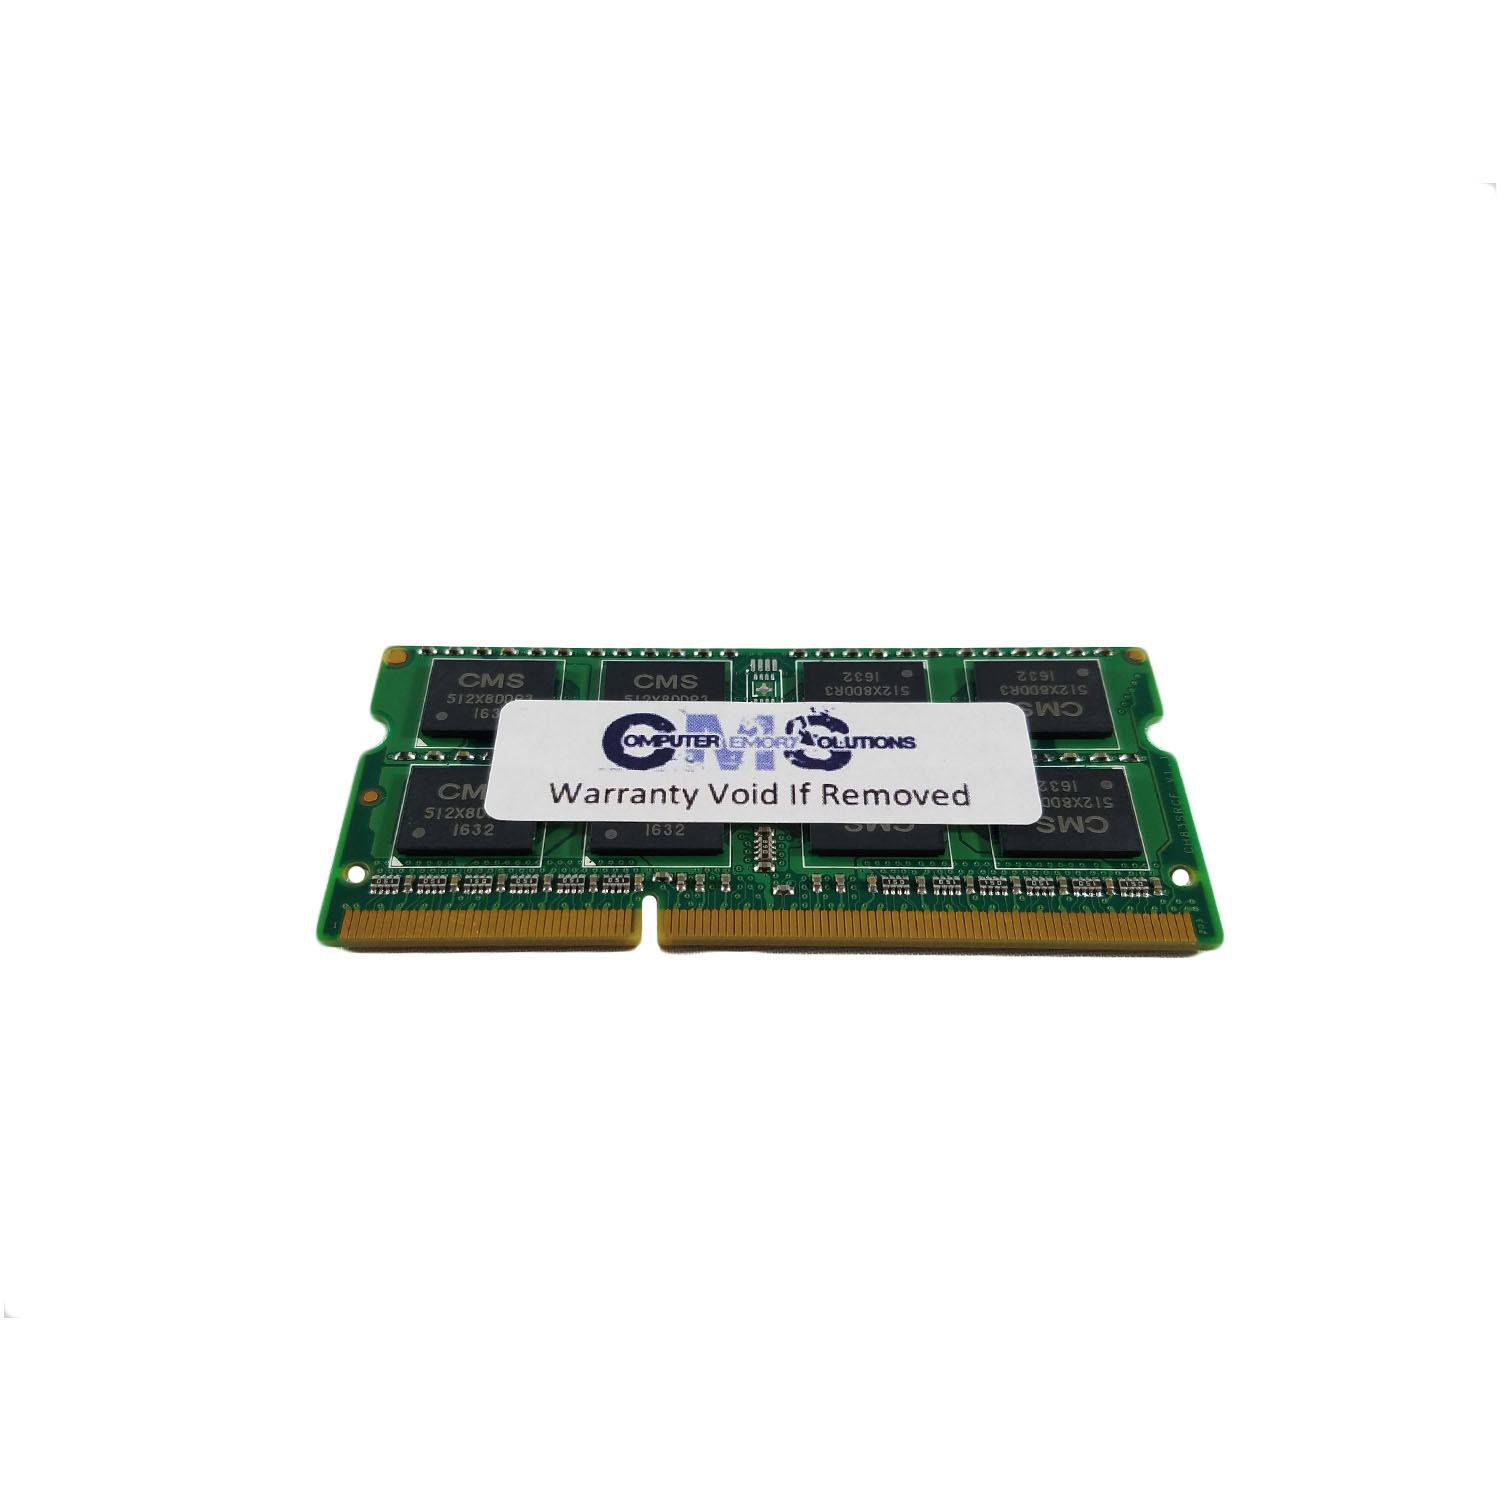 CMS 2GB (1X2GB) DDR3 10600 1333MHZ NON ECC SODIMM Memory Ram Upgrade Compatible with Lenovo® Thinkpad L412, L420, L512, L520 Ddr3-1333 - A44 - image 2 of 2